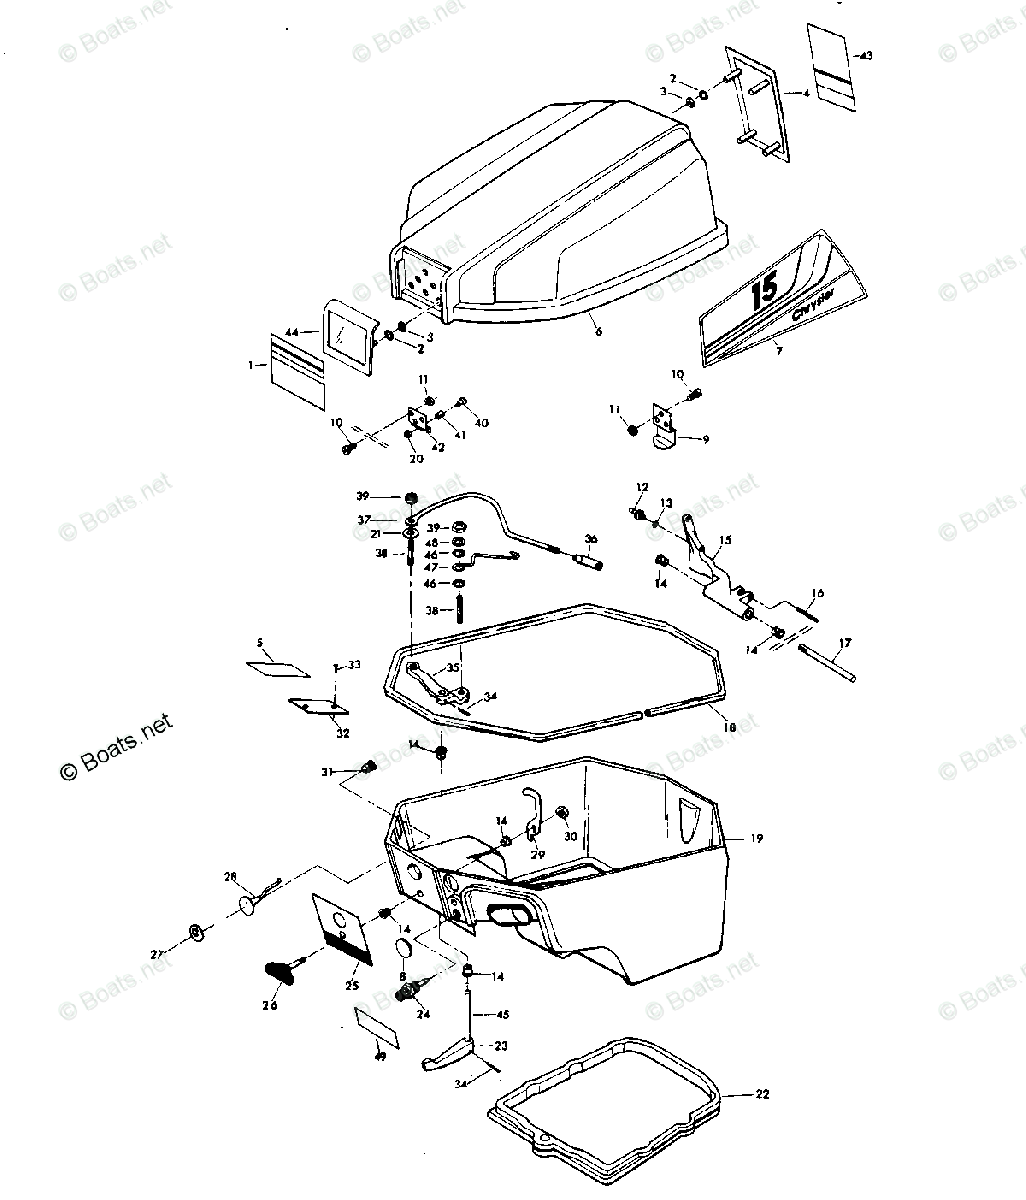 Chrysler 3 3 Engine Diagram